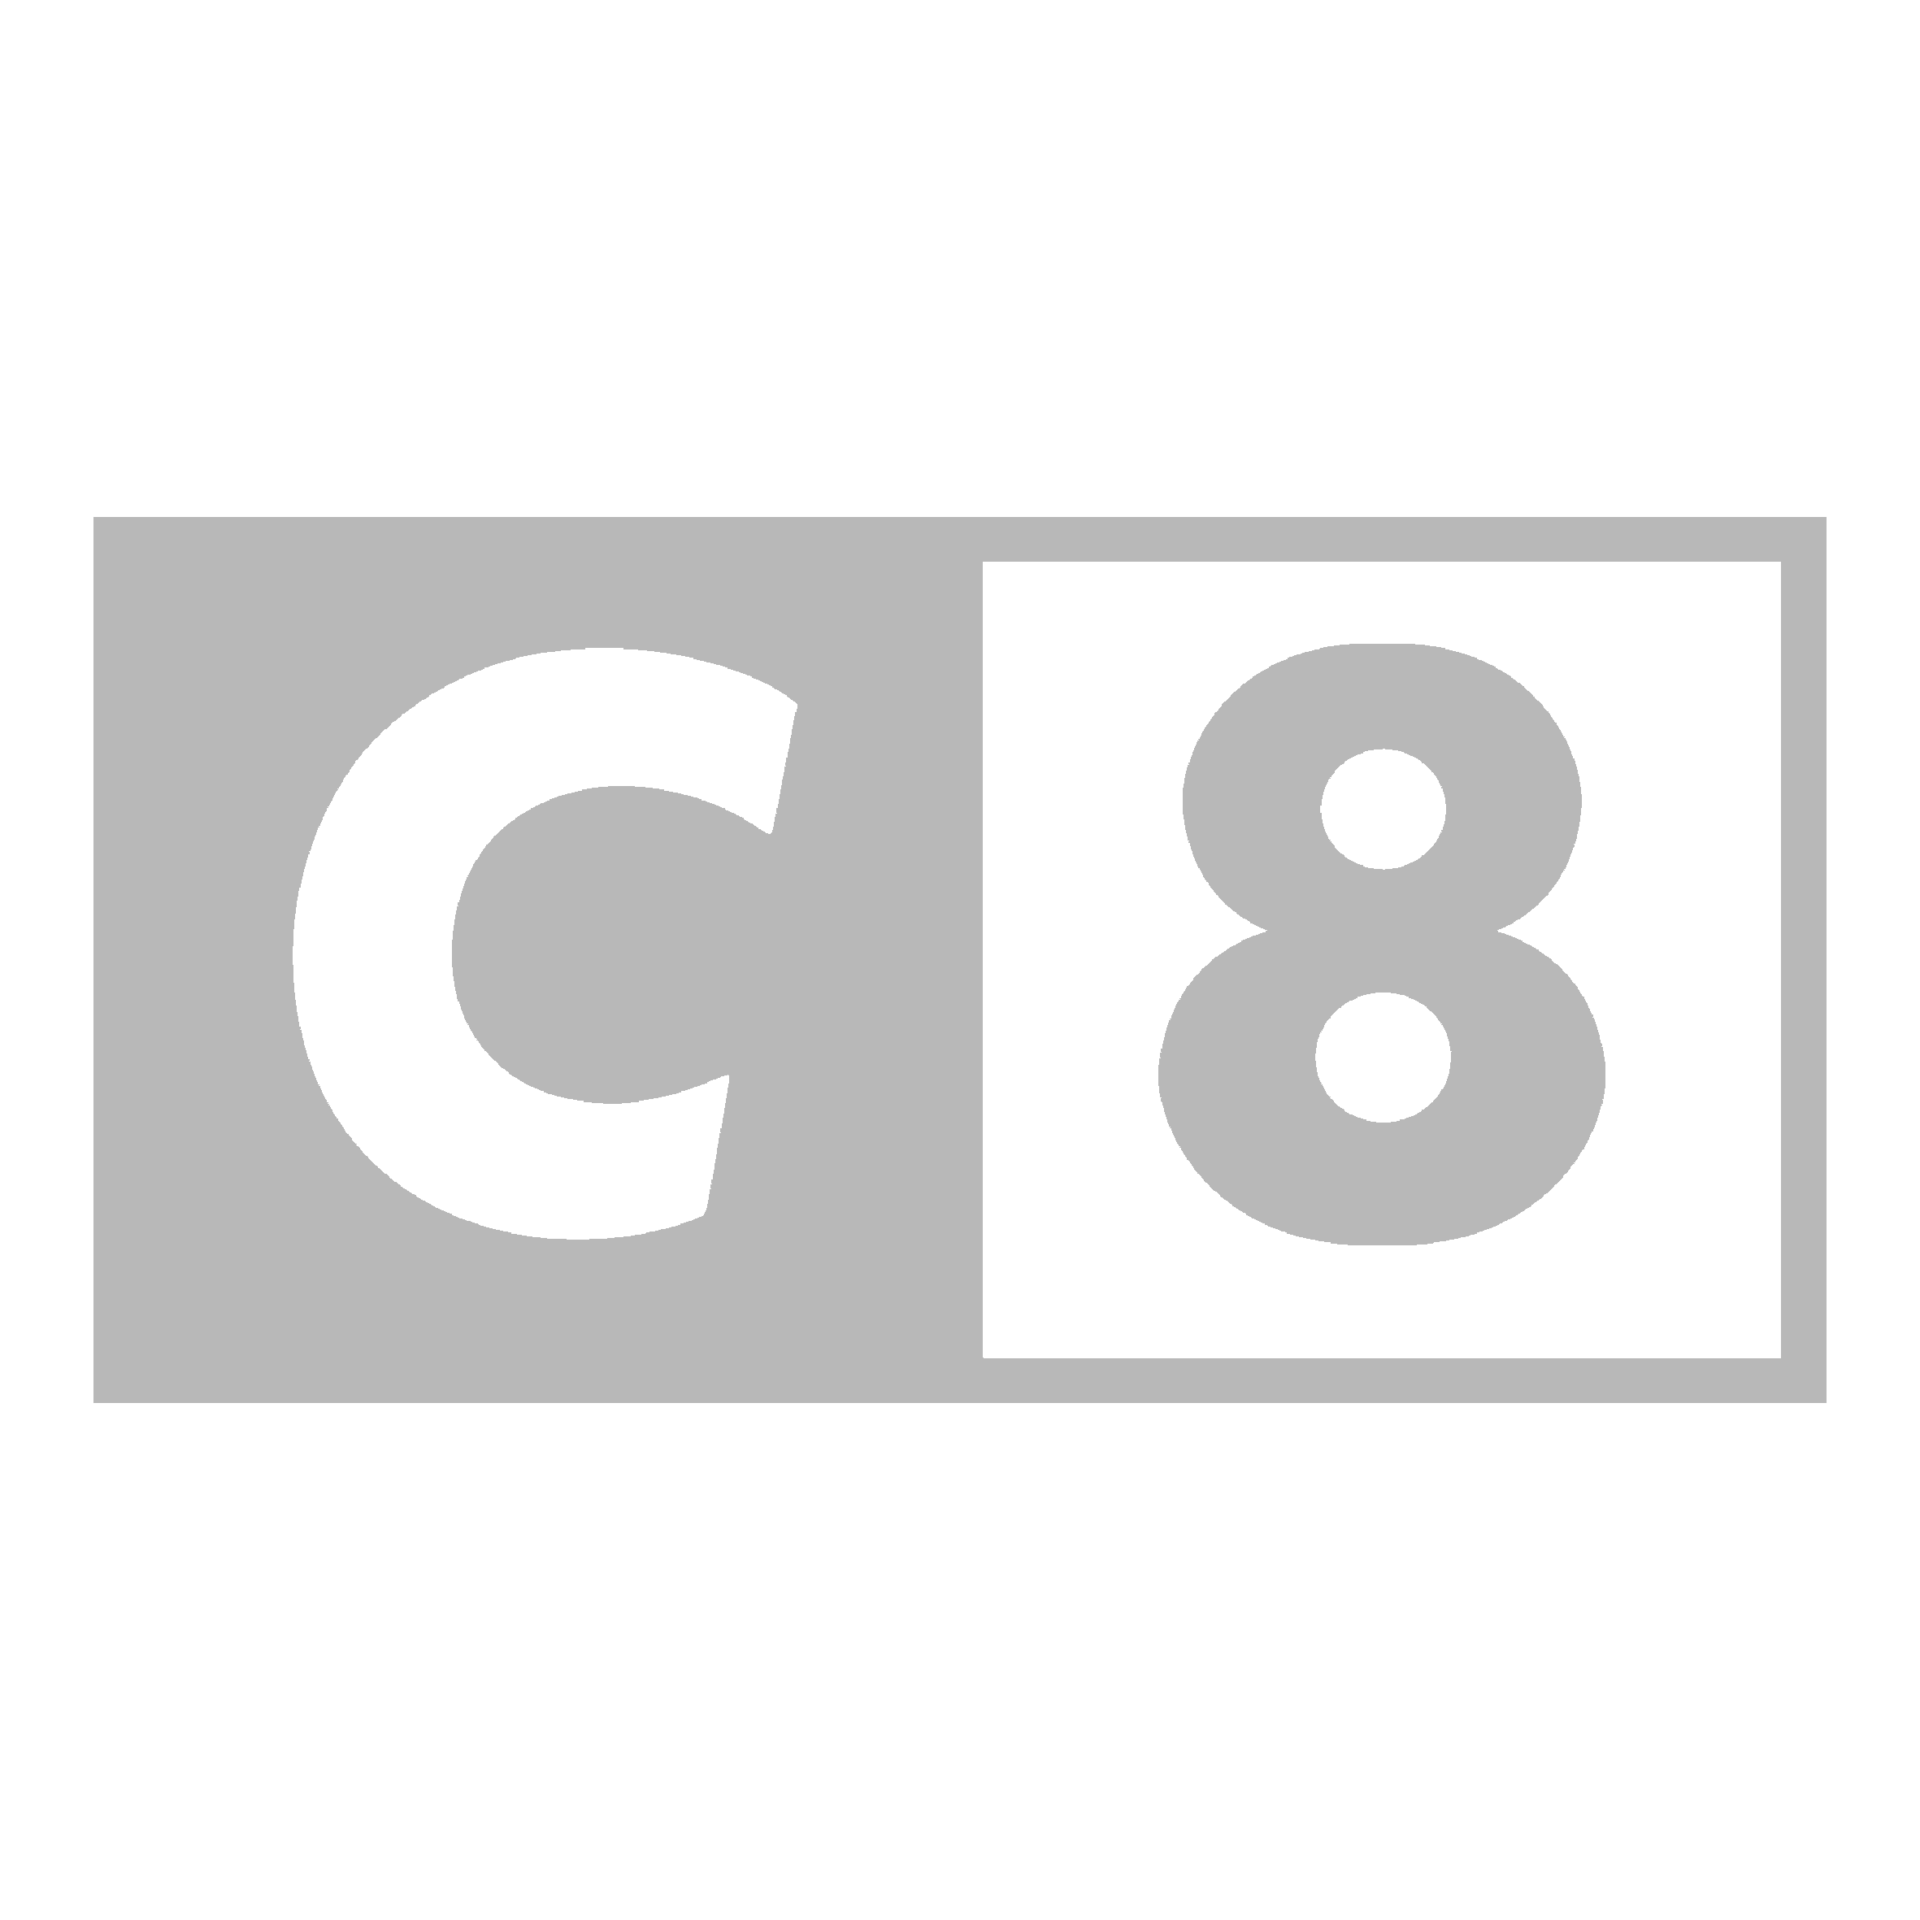 C8 - Transfer